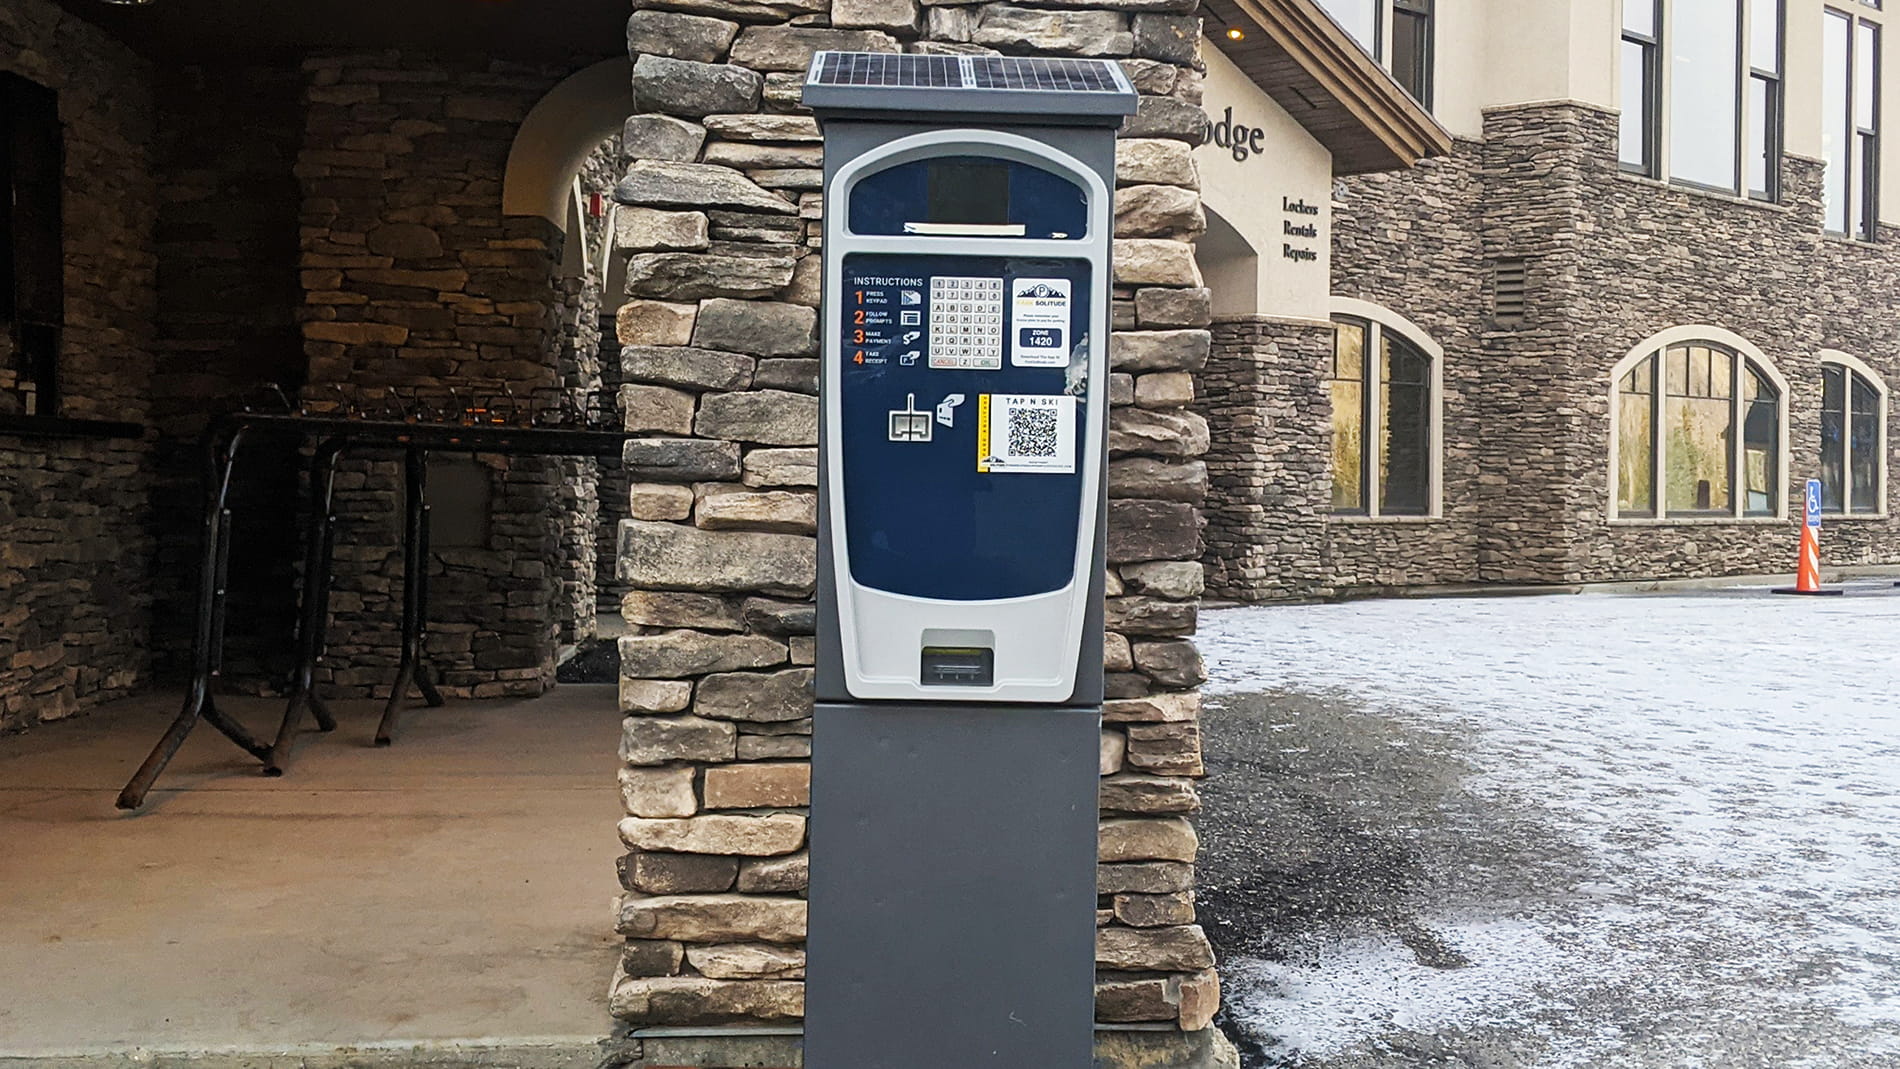 Parking fee payment kiosk